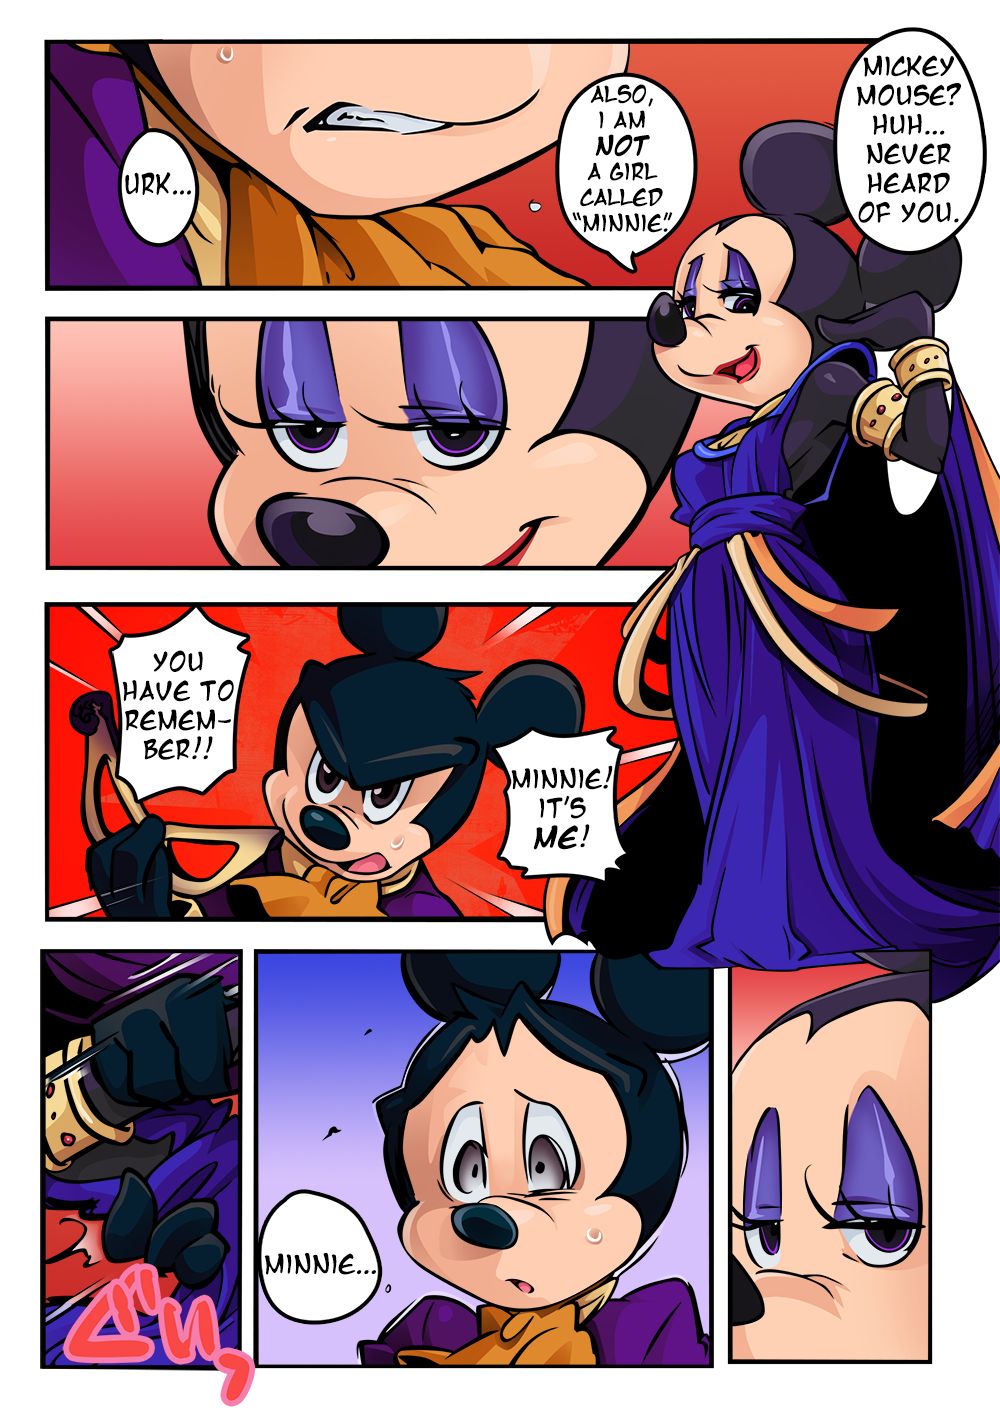 Mickey mouse porn comics